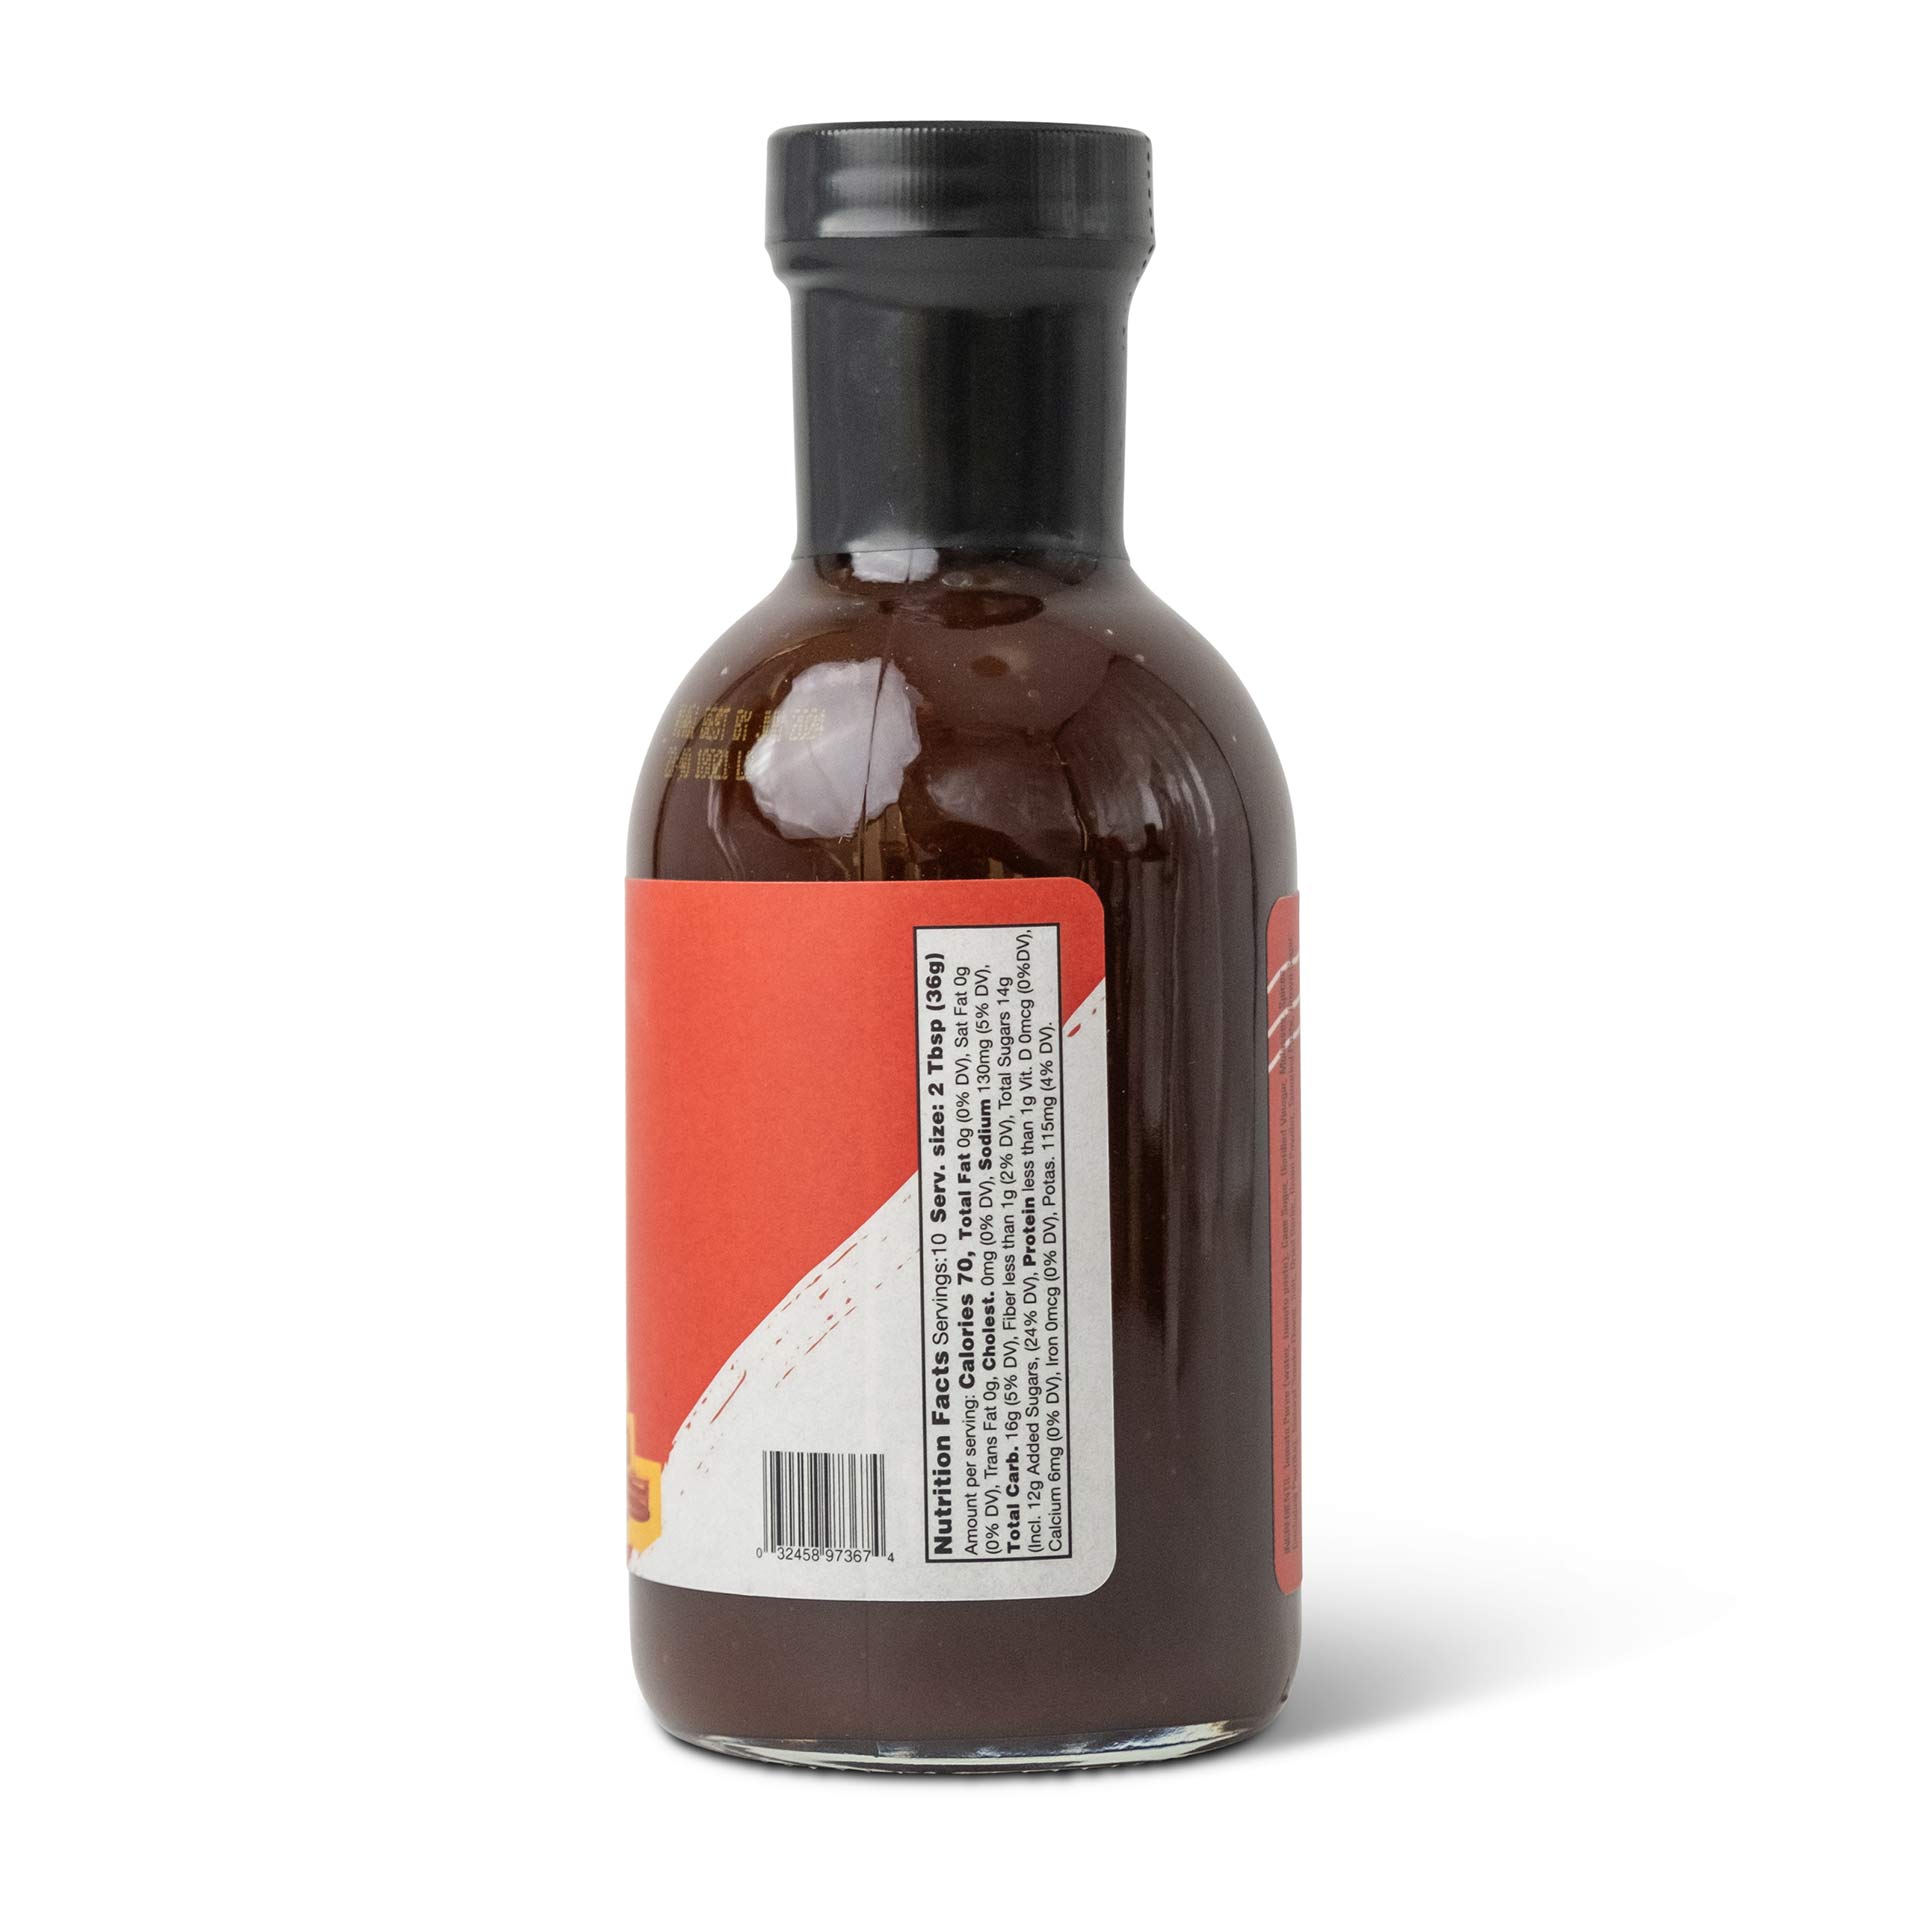 Arrowhead Smoke BBQ Sauce Condiments & Sauces 12043515